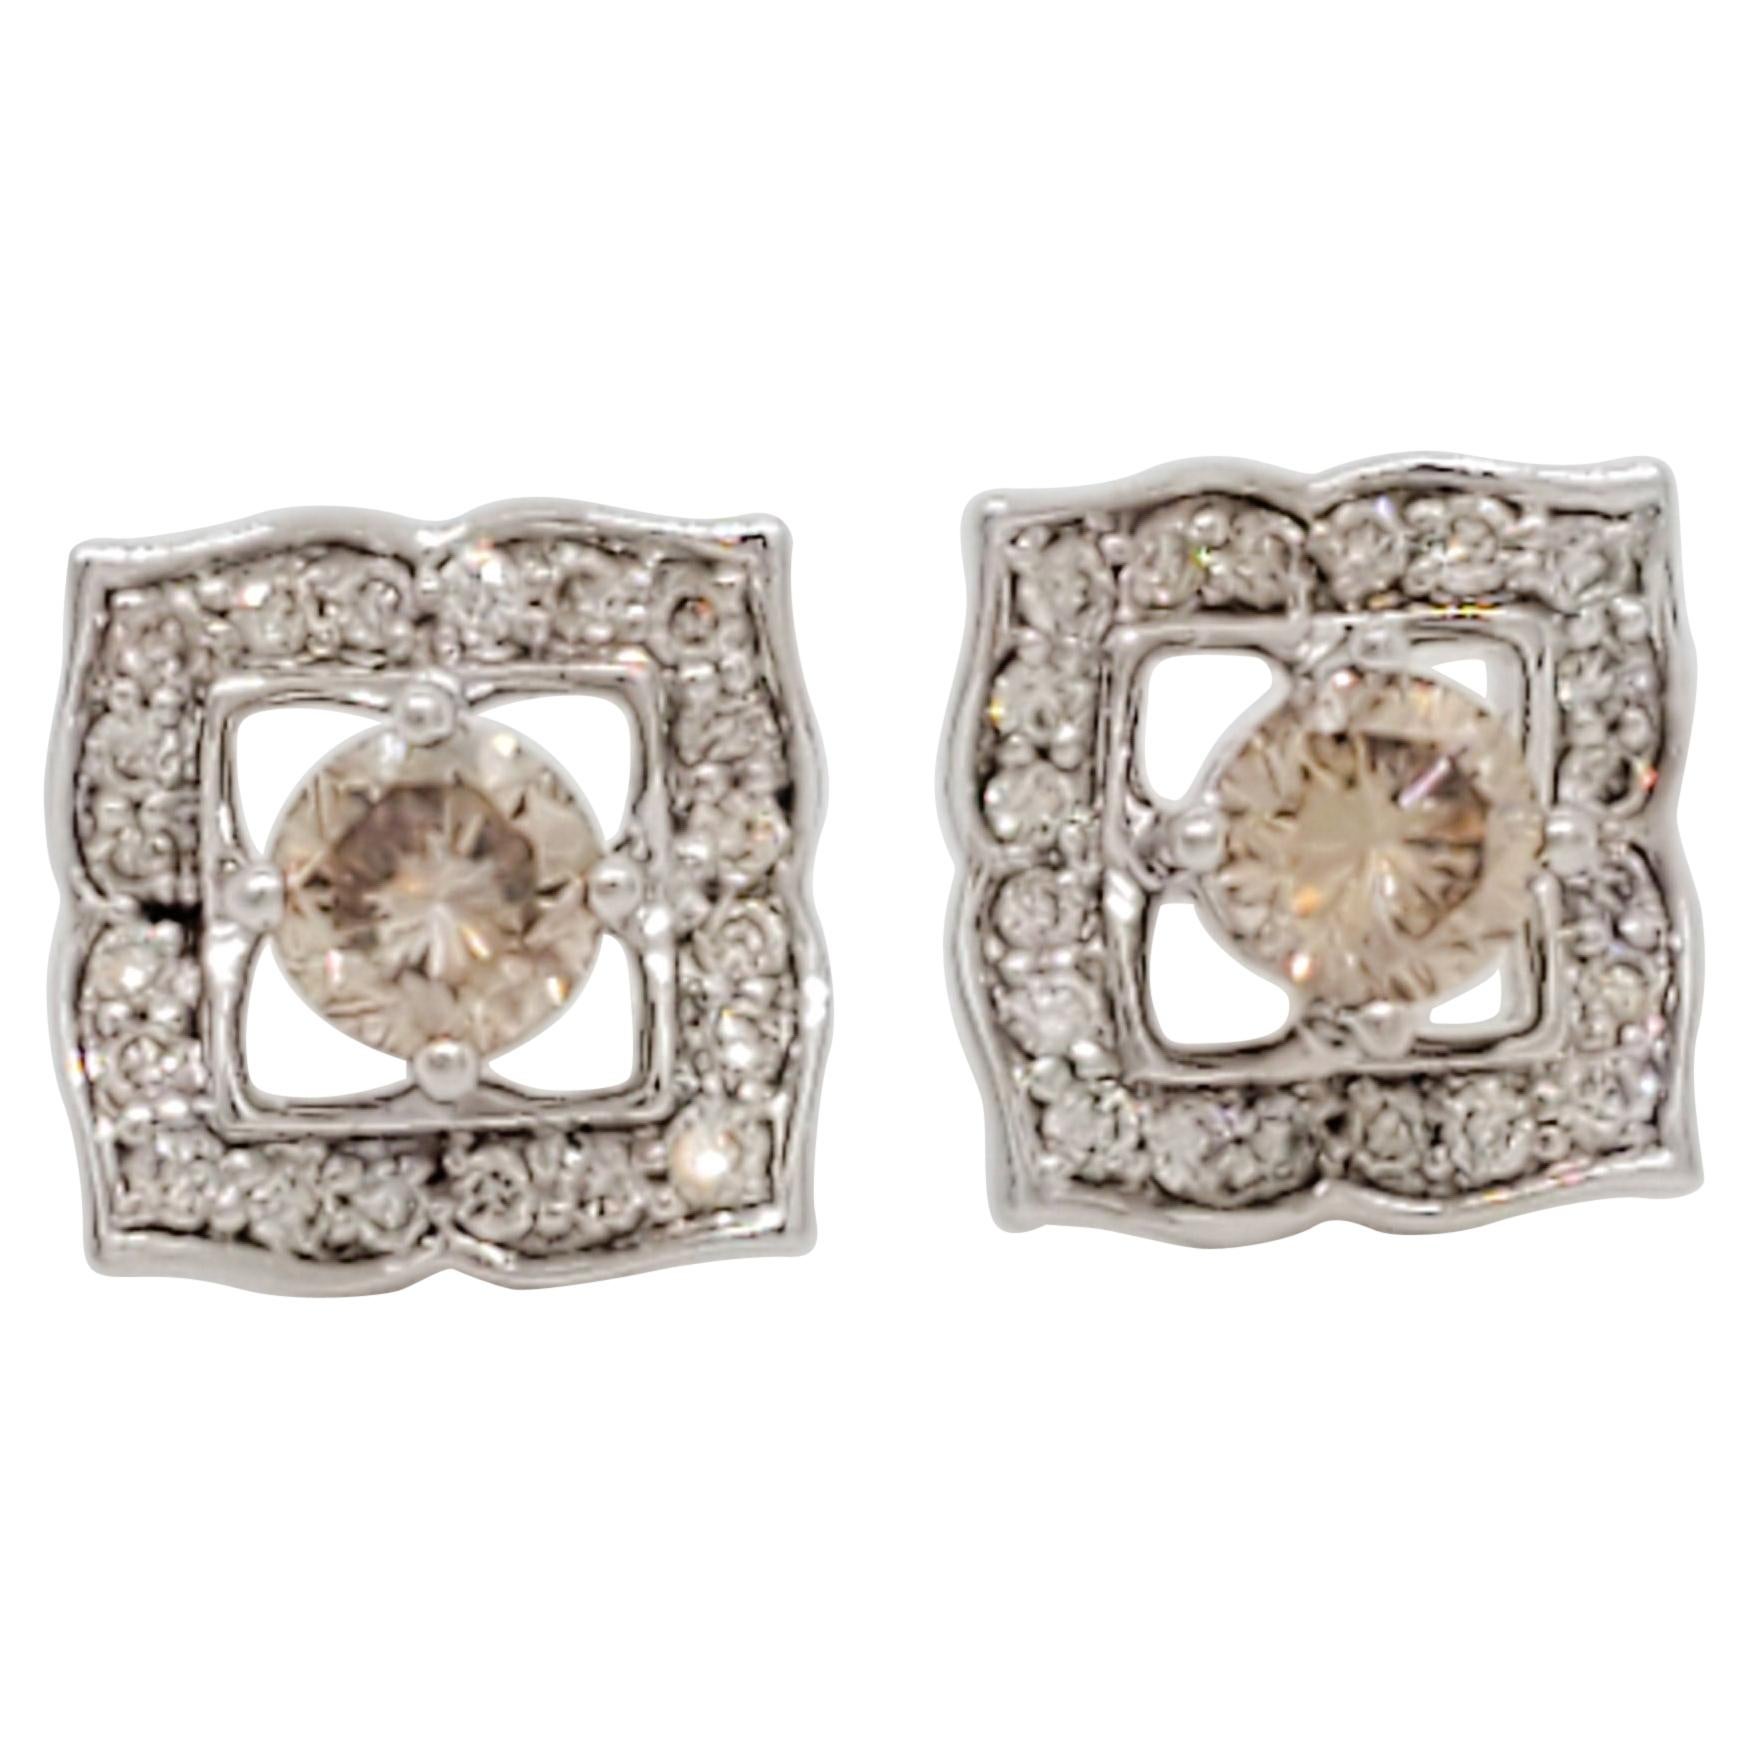 Estate Brown and White Diamond Earrings in 18k White Gold